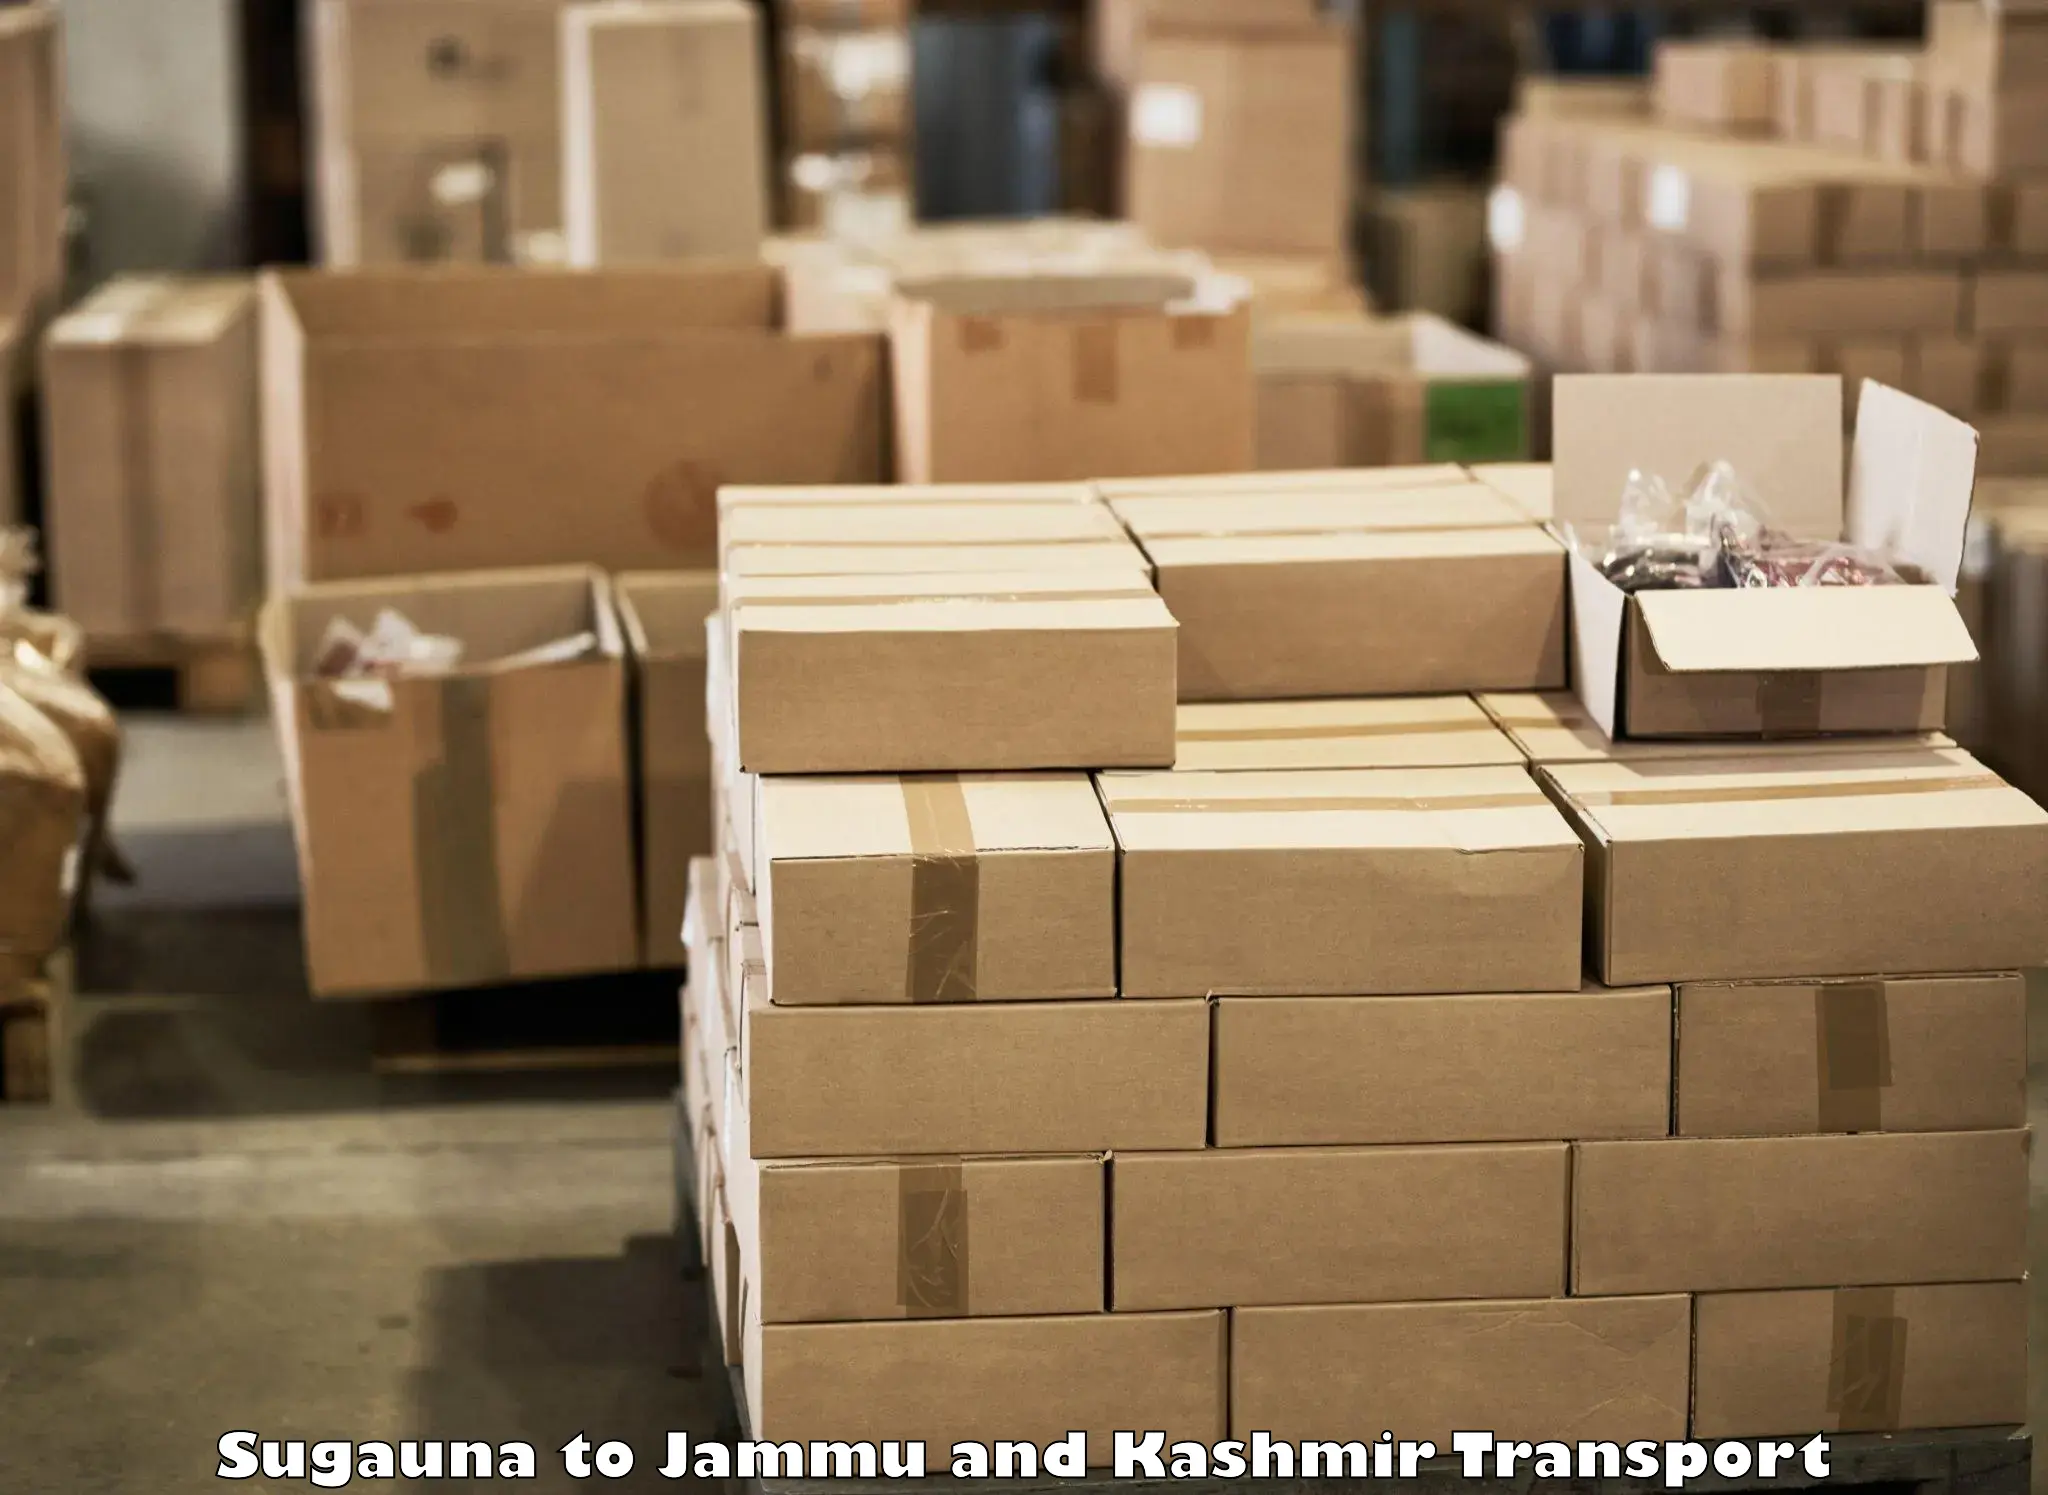 Container transport service Sugauna to Jammu and Kashmir